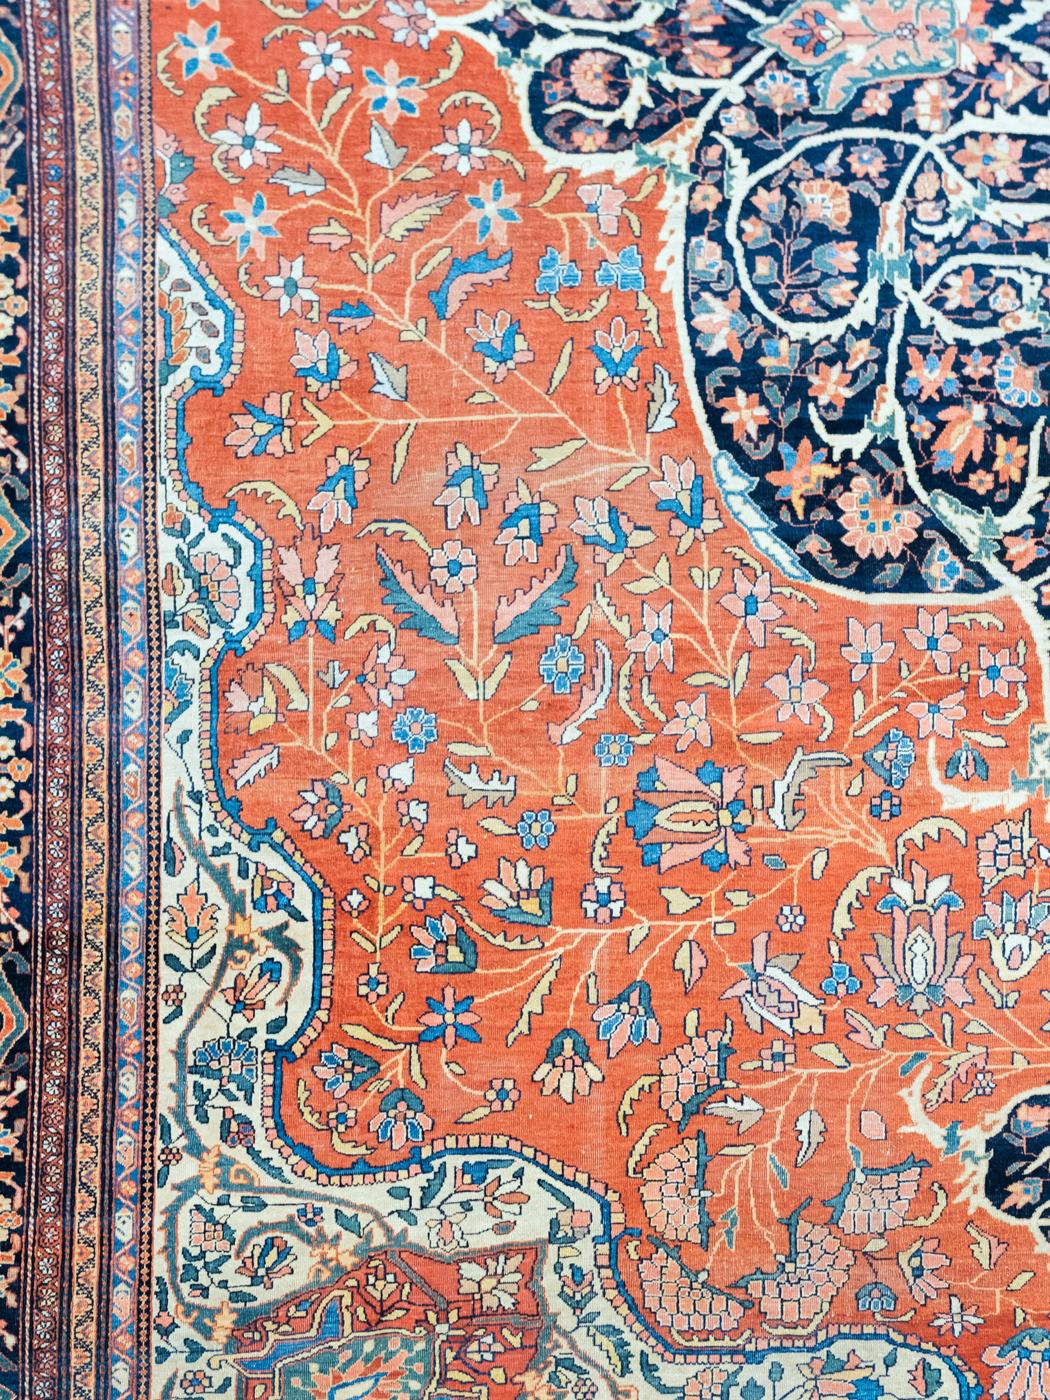 Late 19th Century Antique Persian Farahan Carpet, Red, Orange, Indigo, 10’ x 14’ For Sale